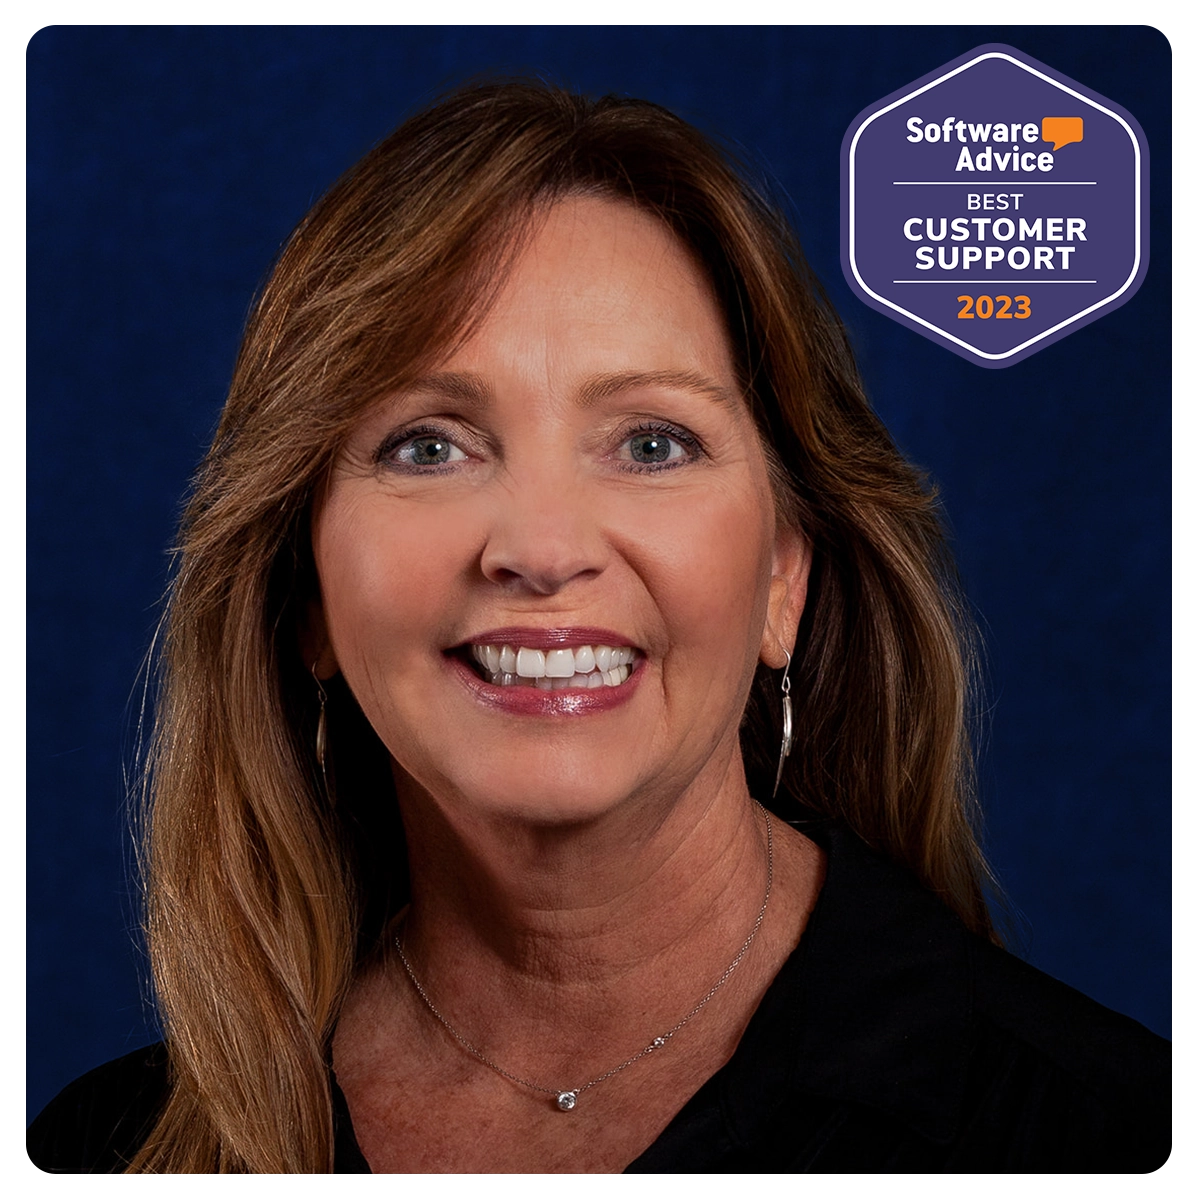 Janet Bartlett headshot and customer support badge